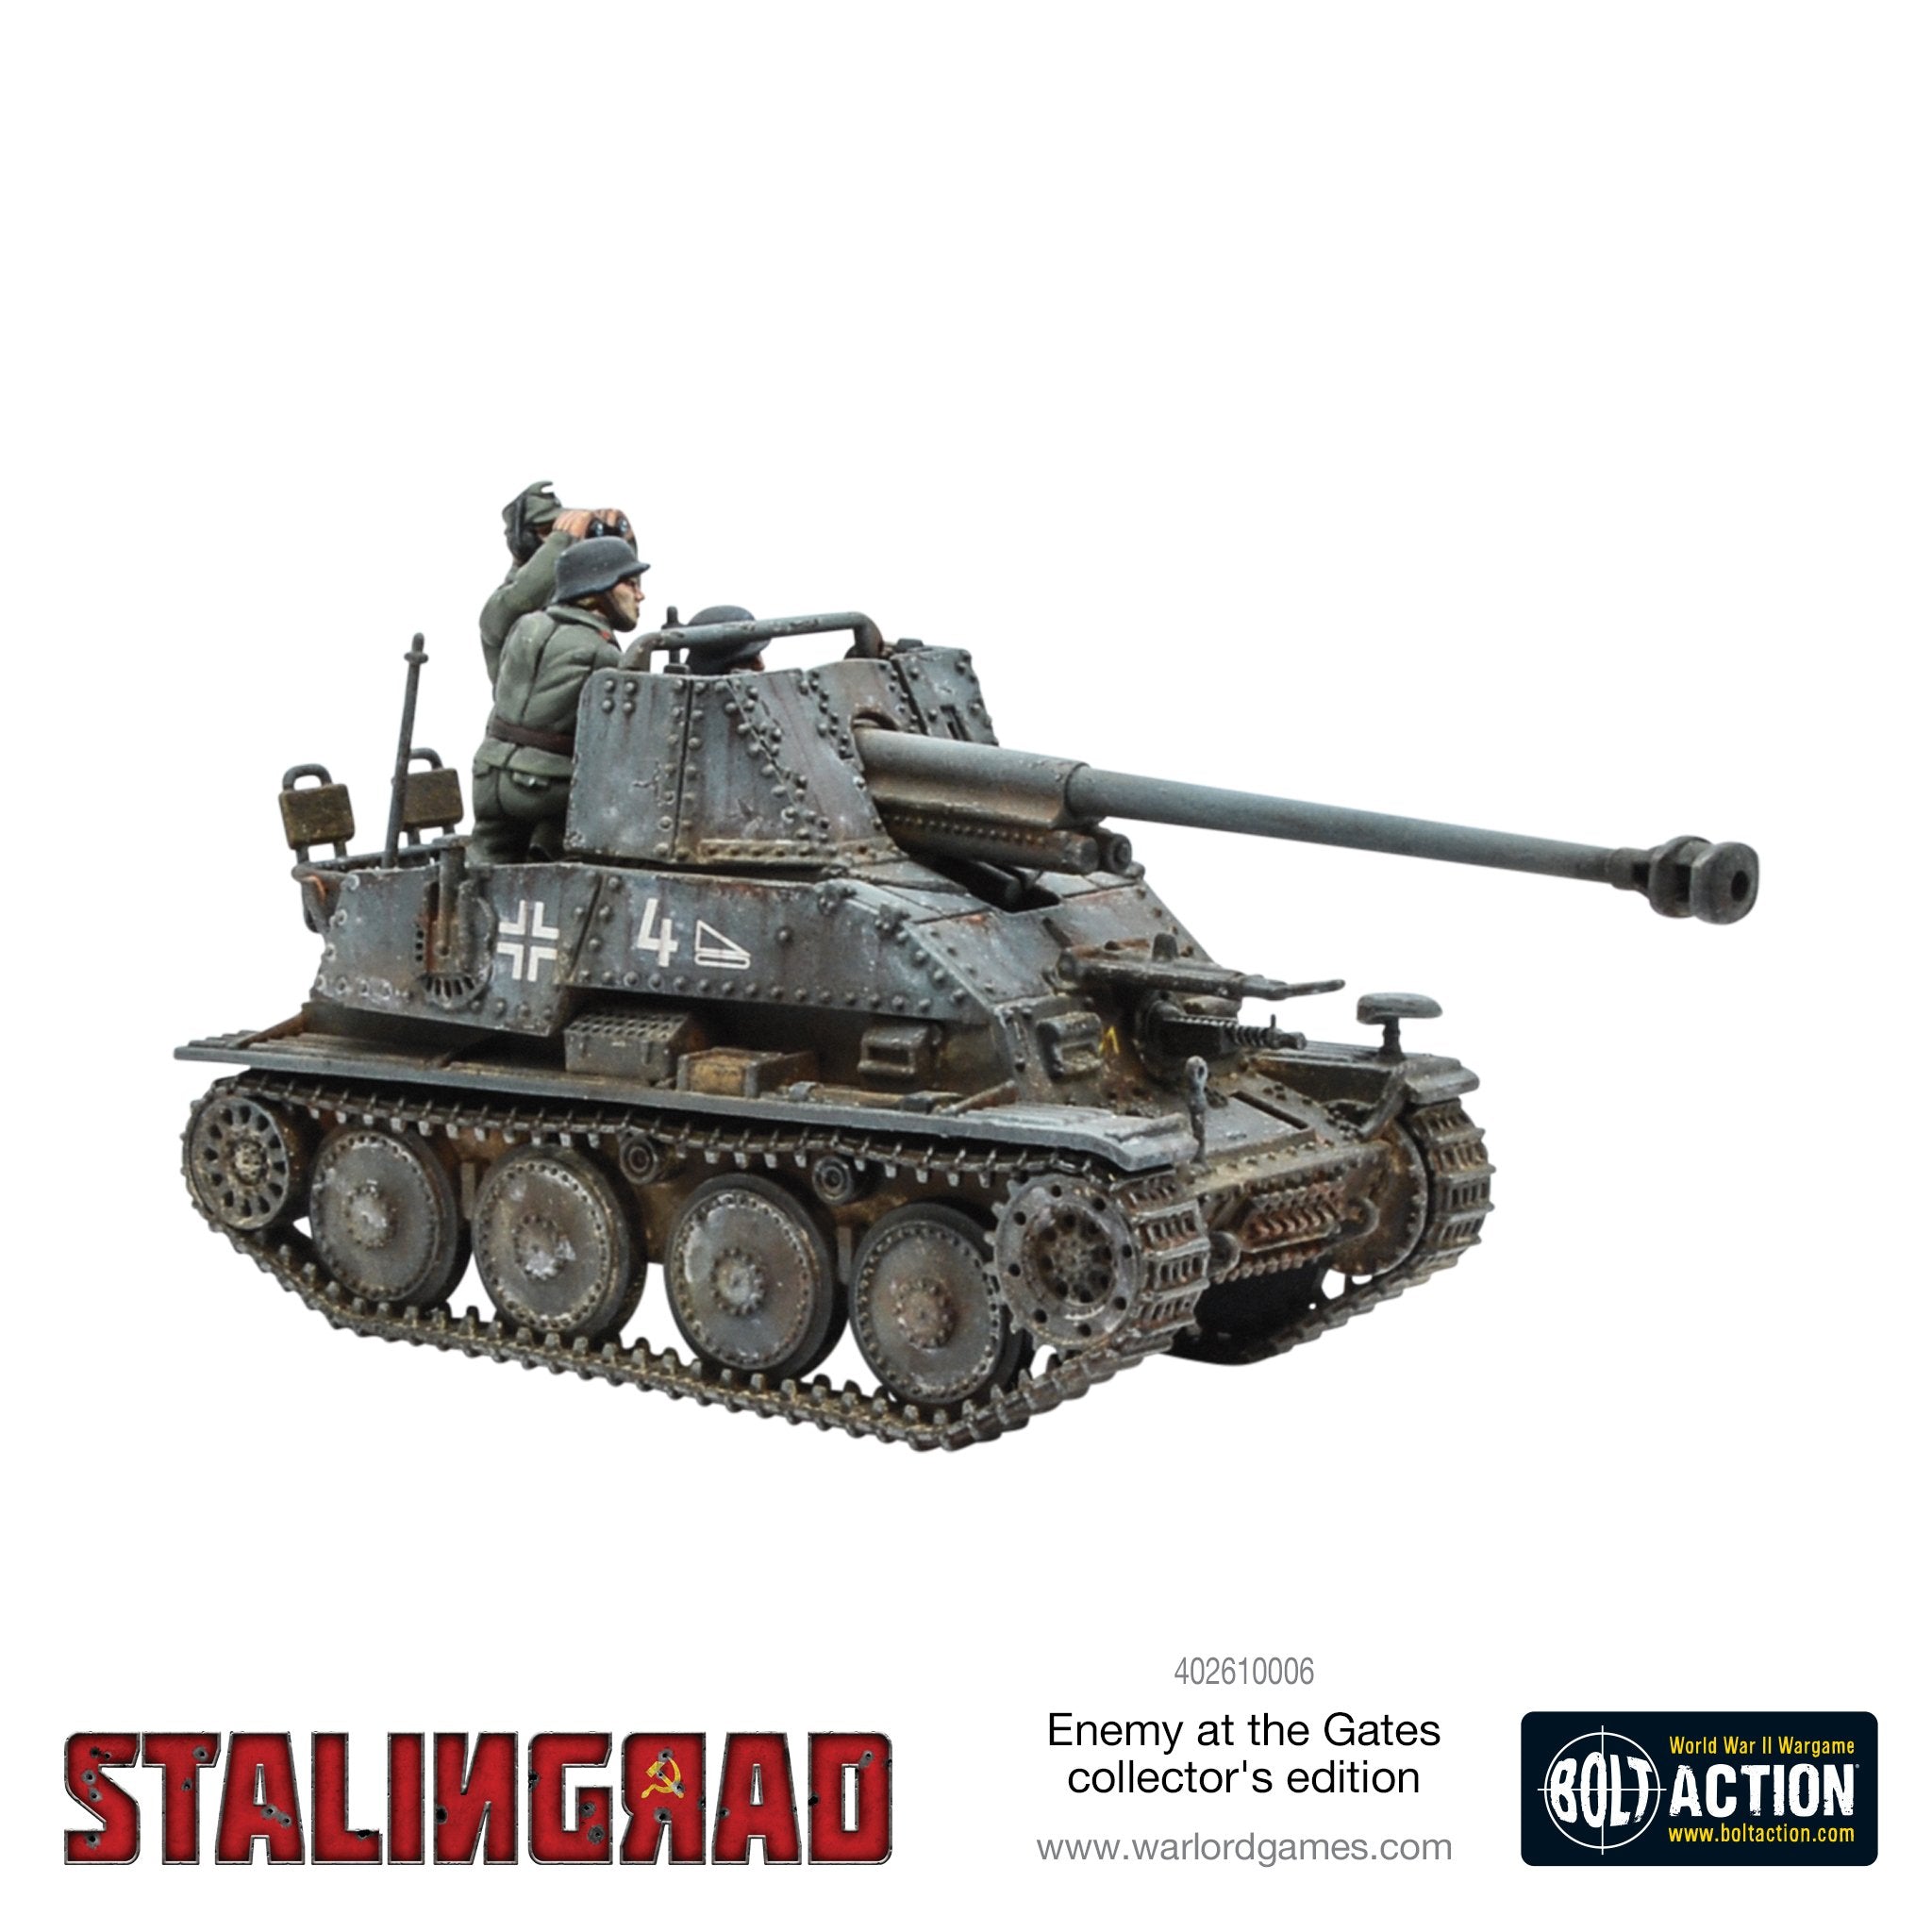 Enemy at the Gates - Stalingrad battle-set collectors edition